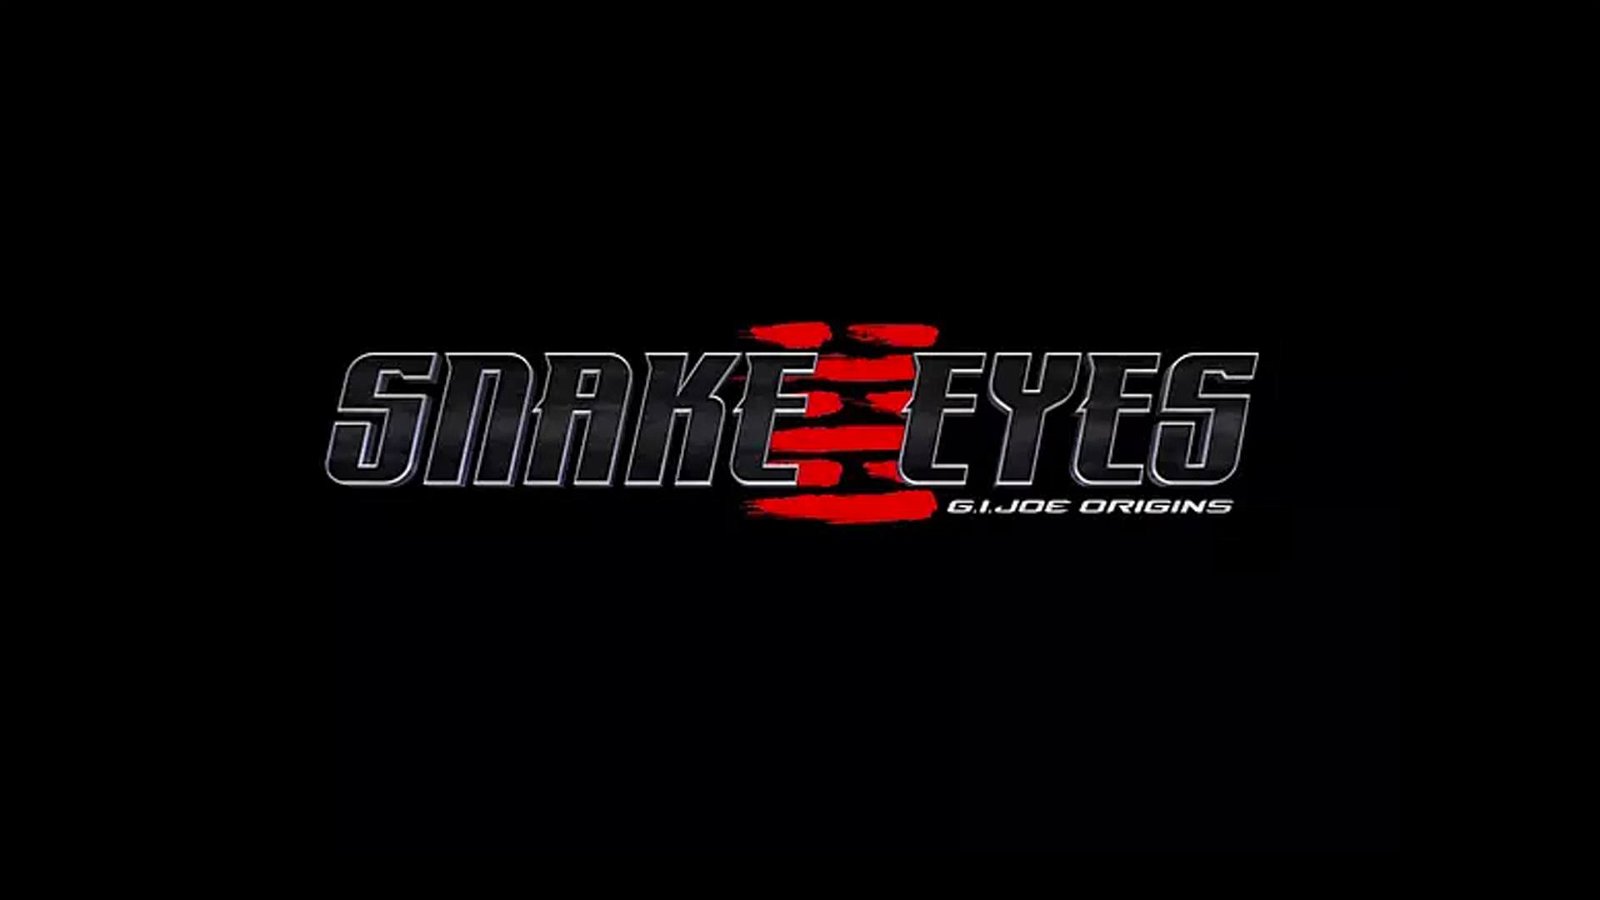 Immagine di Snake Eyes: G.I. Joe Origins, le prime immagini del film